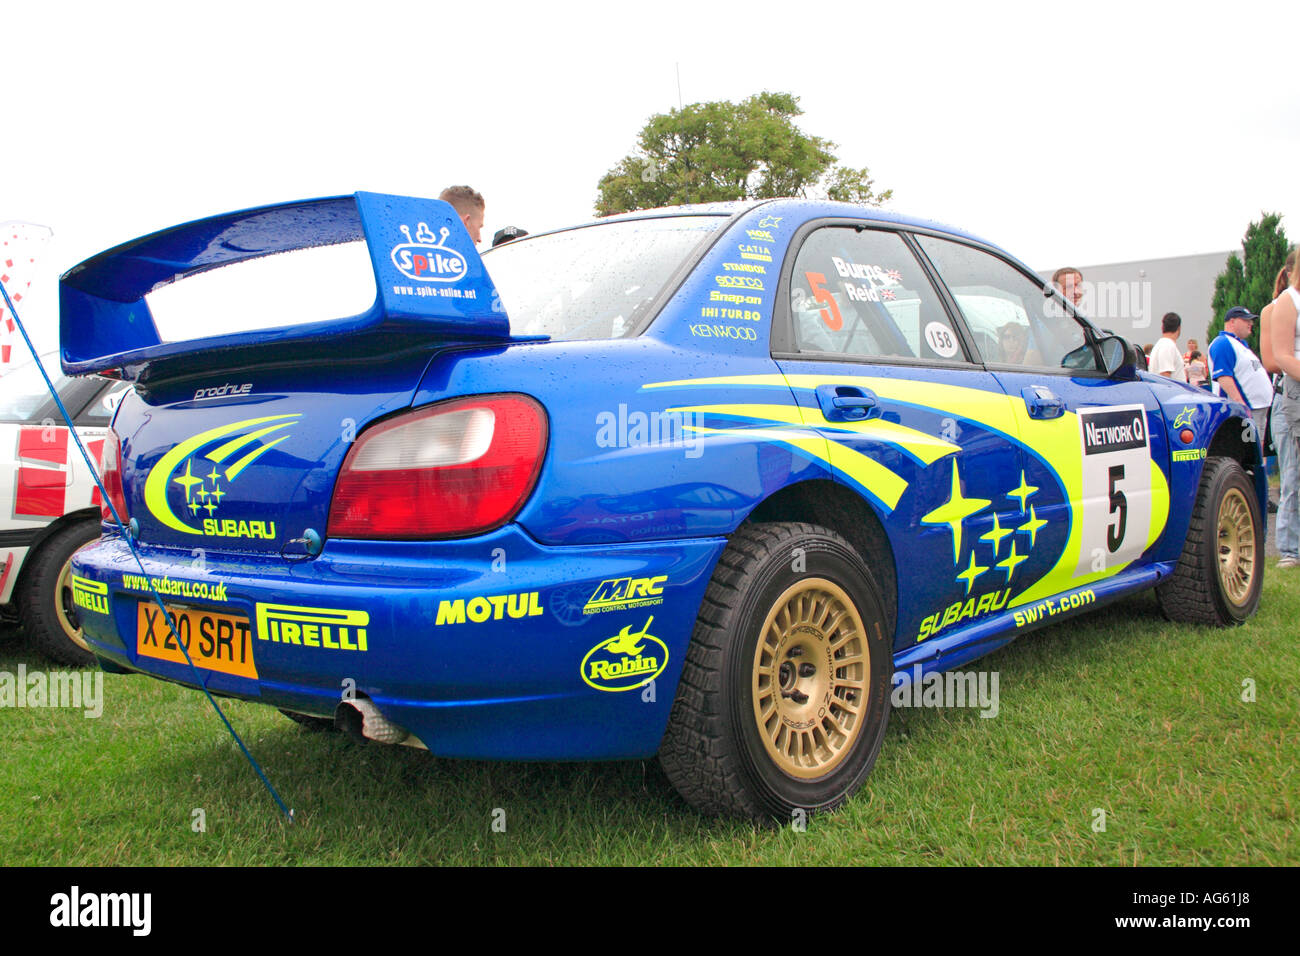 Richard Burns 2001 Subaru Impreza WRC 2001 Auto bei der 2006 Rallye Tag bei  Castle Combe Stockfotografie - Alamy